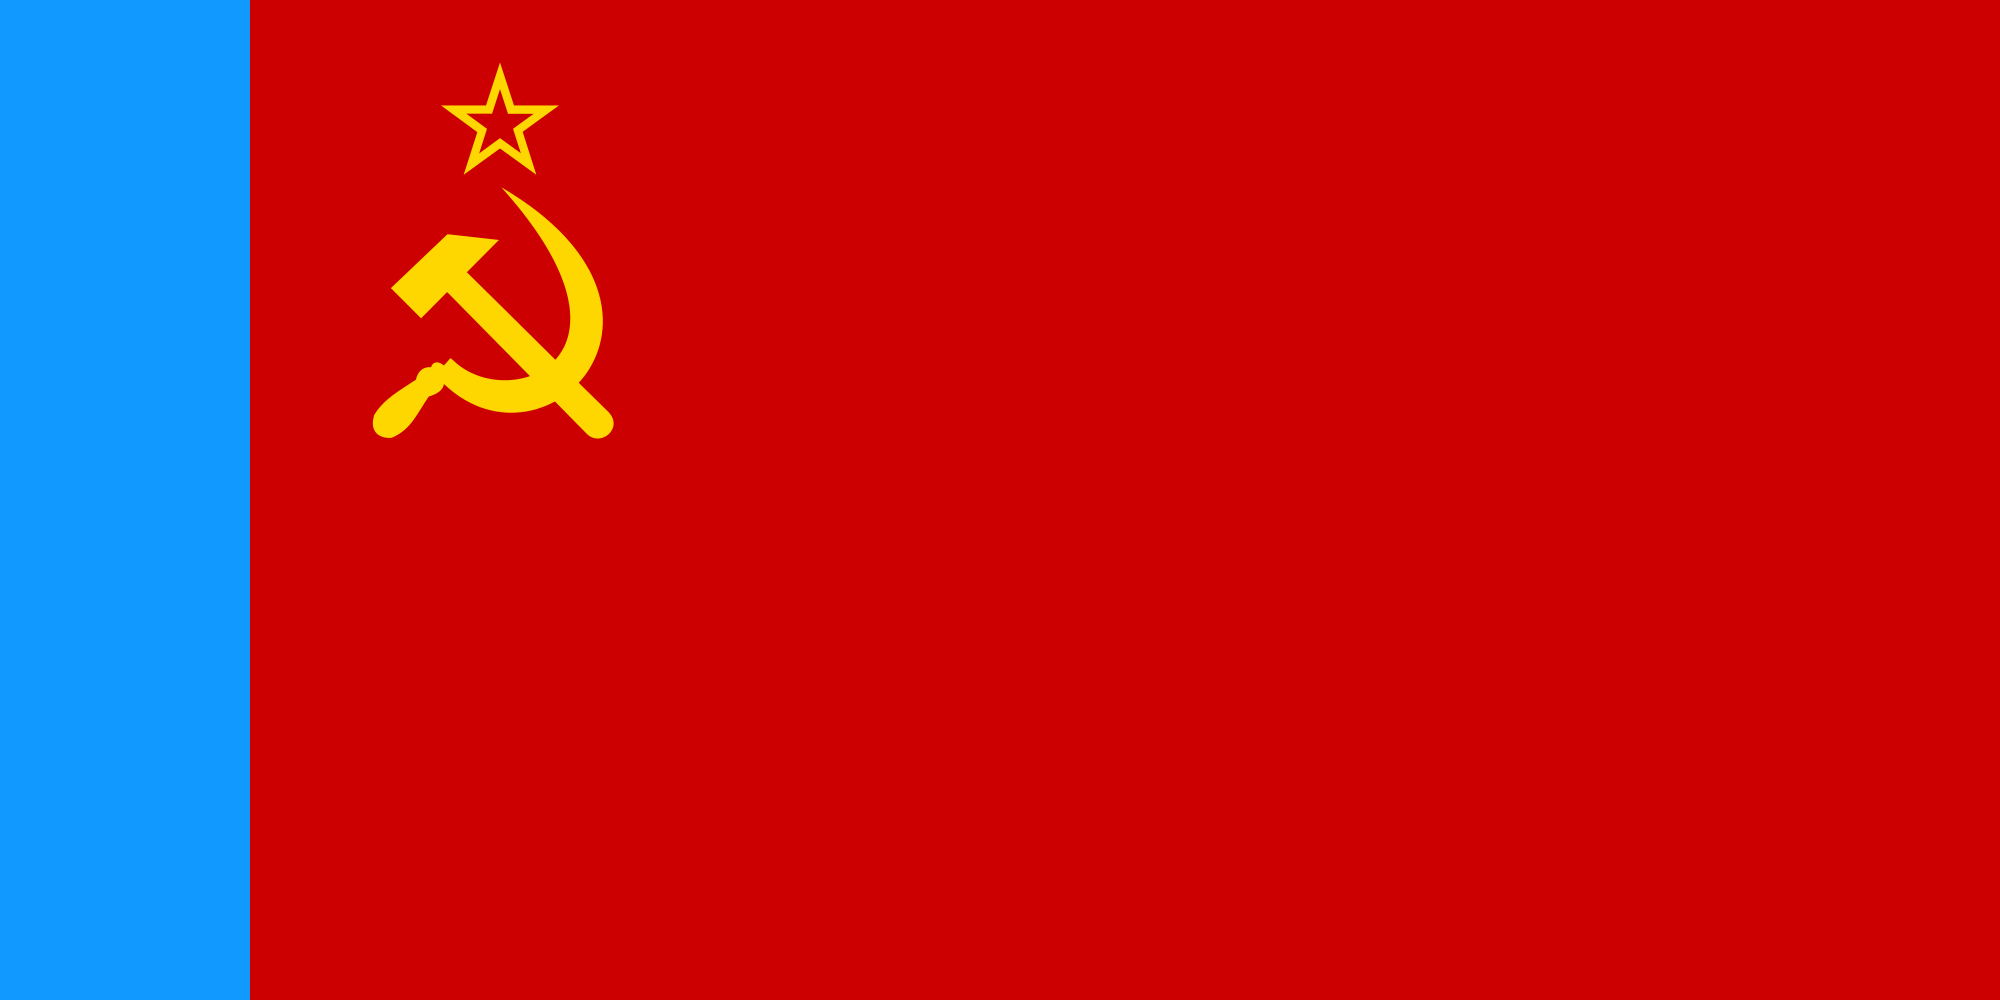 Soviet Union Symbols (Marcuspearl)				Fan Feed